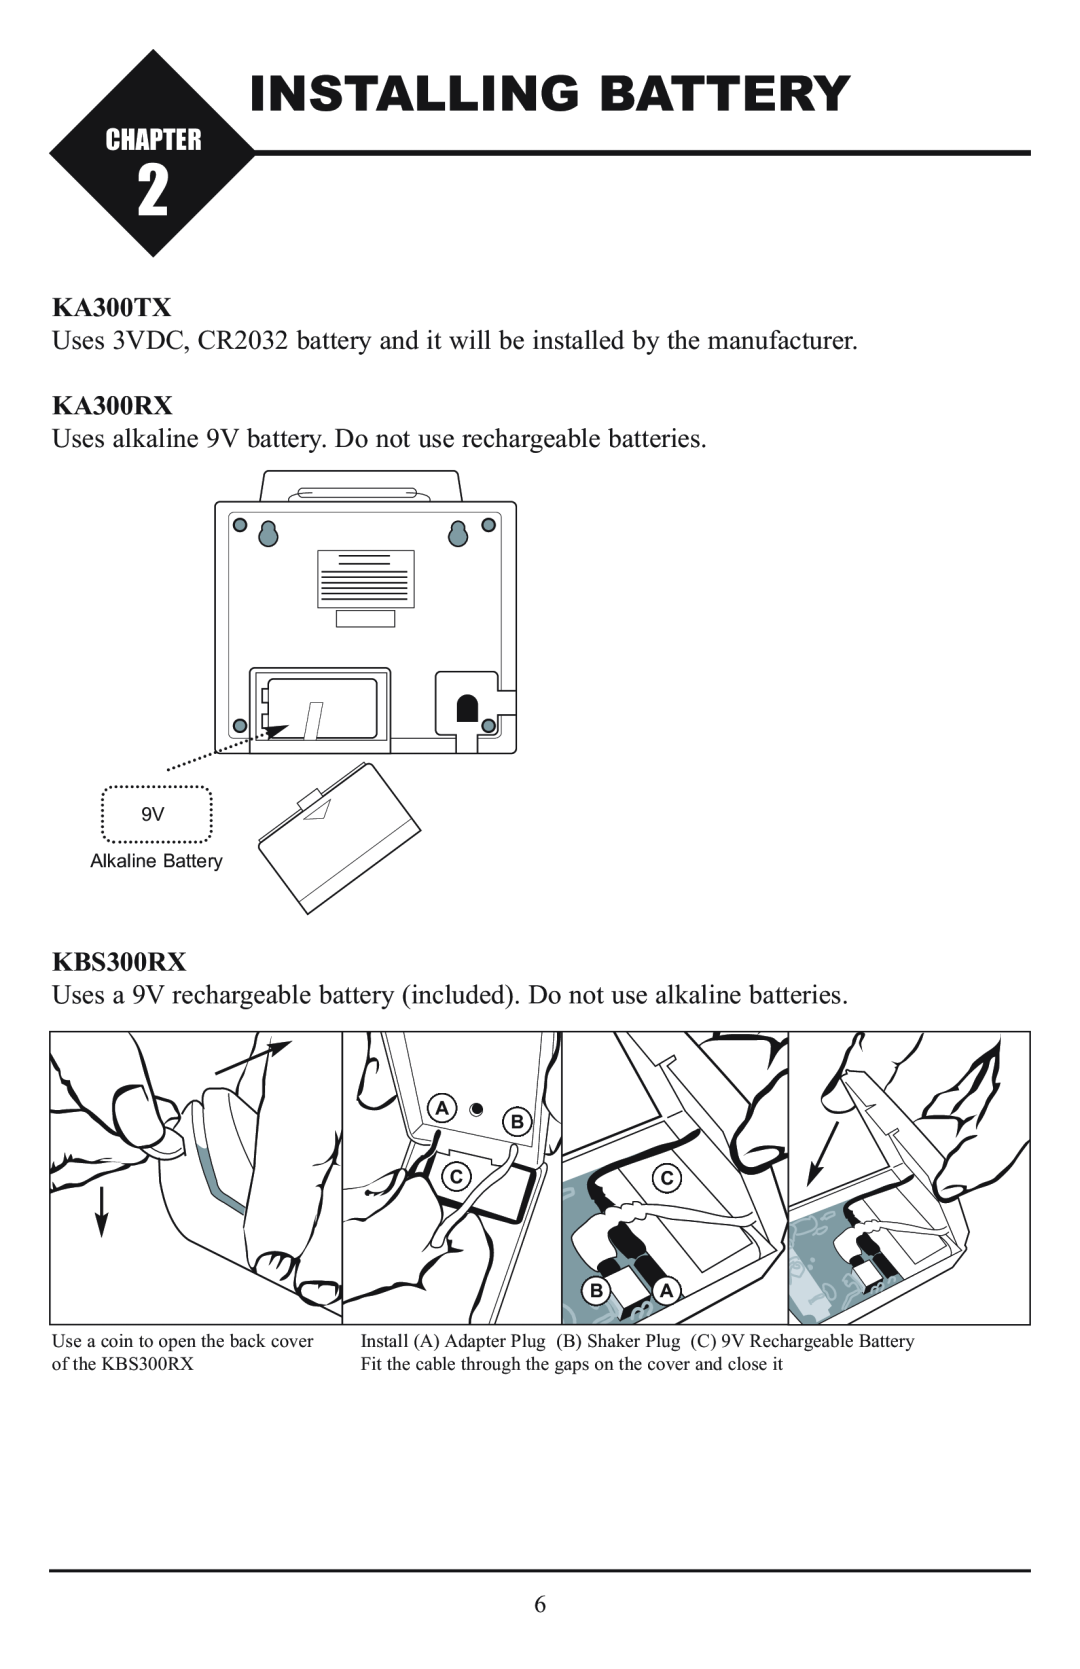 Krown Manufacturing KBS300RX instruction manual Installing Battery, Chapter, KA300TX, KA300RX 